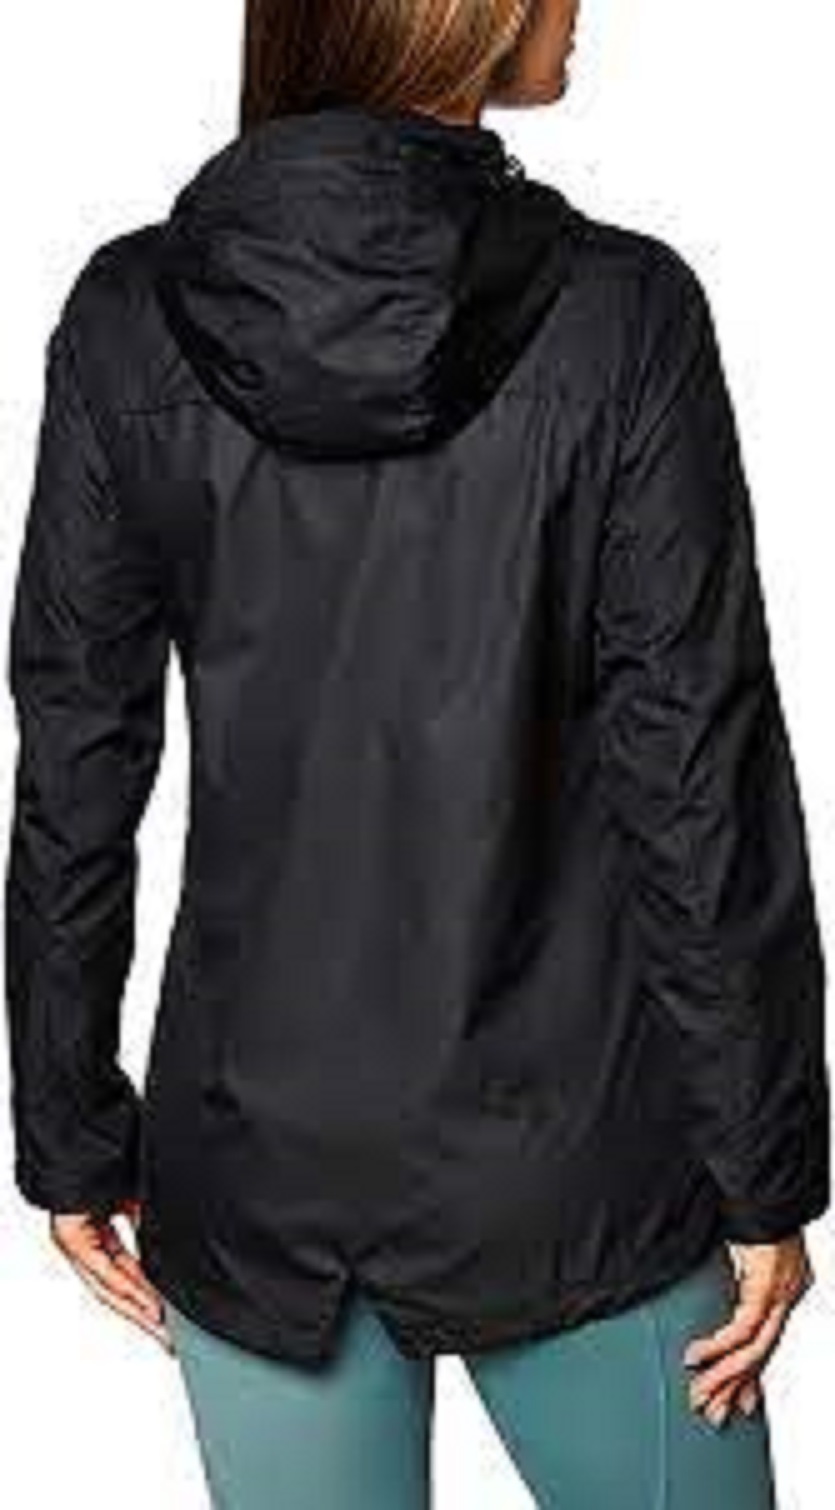 Nike Women's Academy 18 Rain Jacket Black Size Small